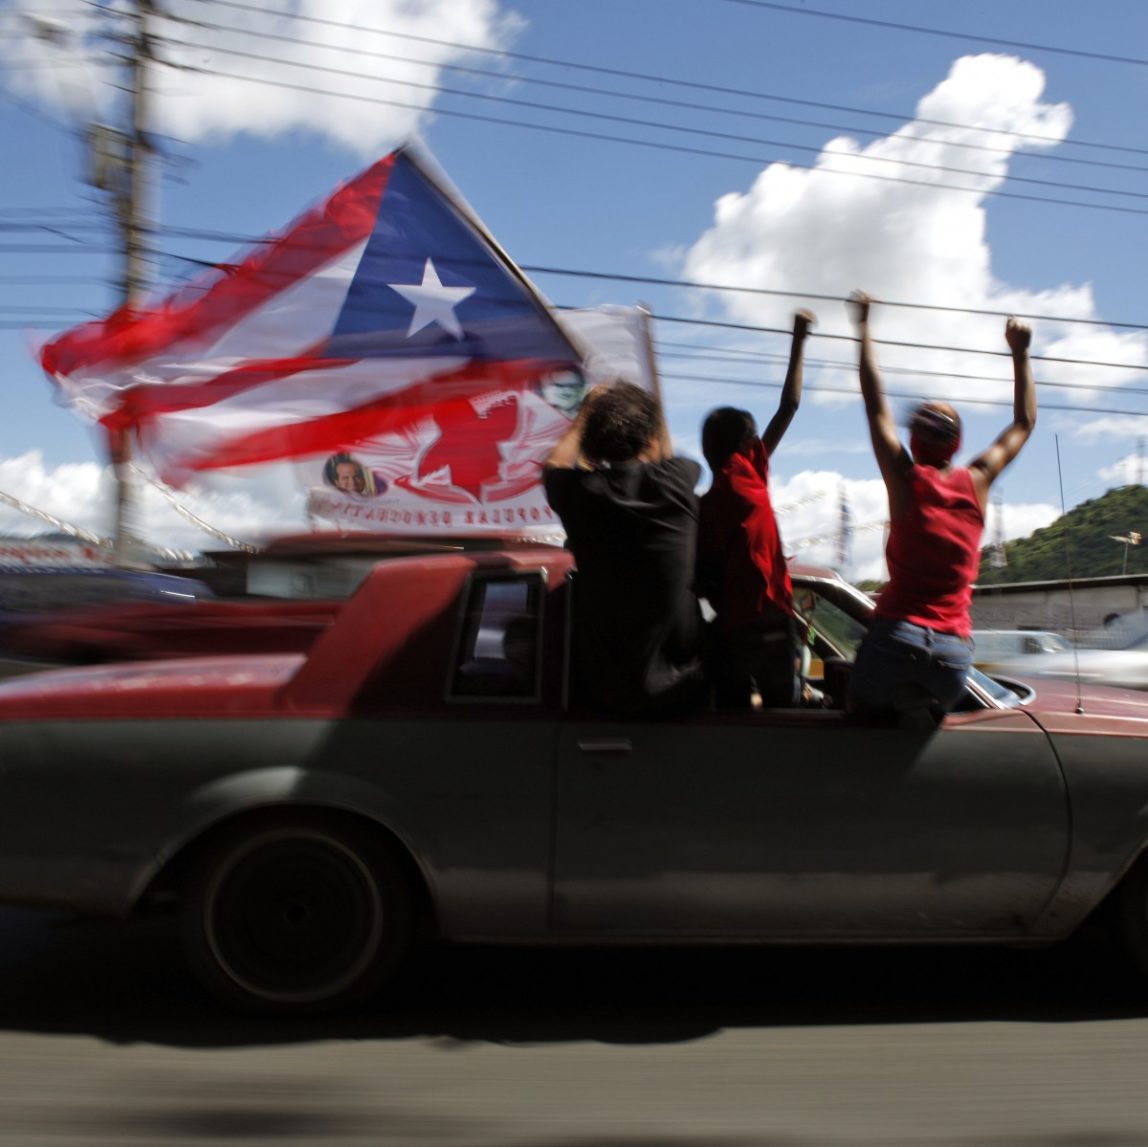 People ride atop a vehicle waving a Puerto Rican flag during elections in San Juan, Puerto Rico, Tuesday, Nov. 6, 2012. (AP Photo/Ricardo Arduengo)